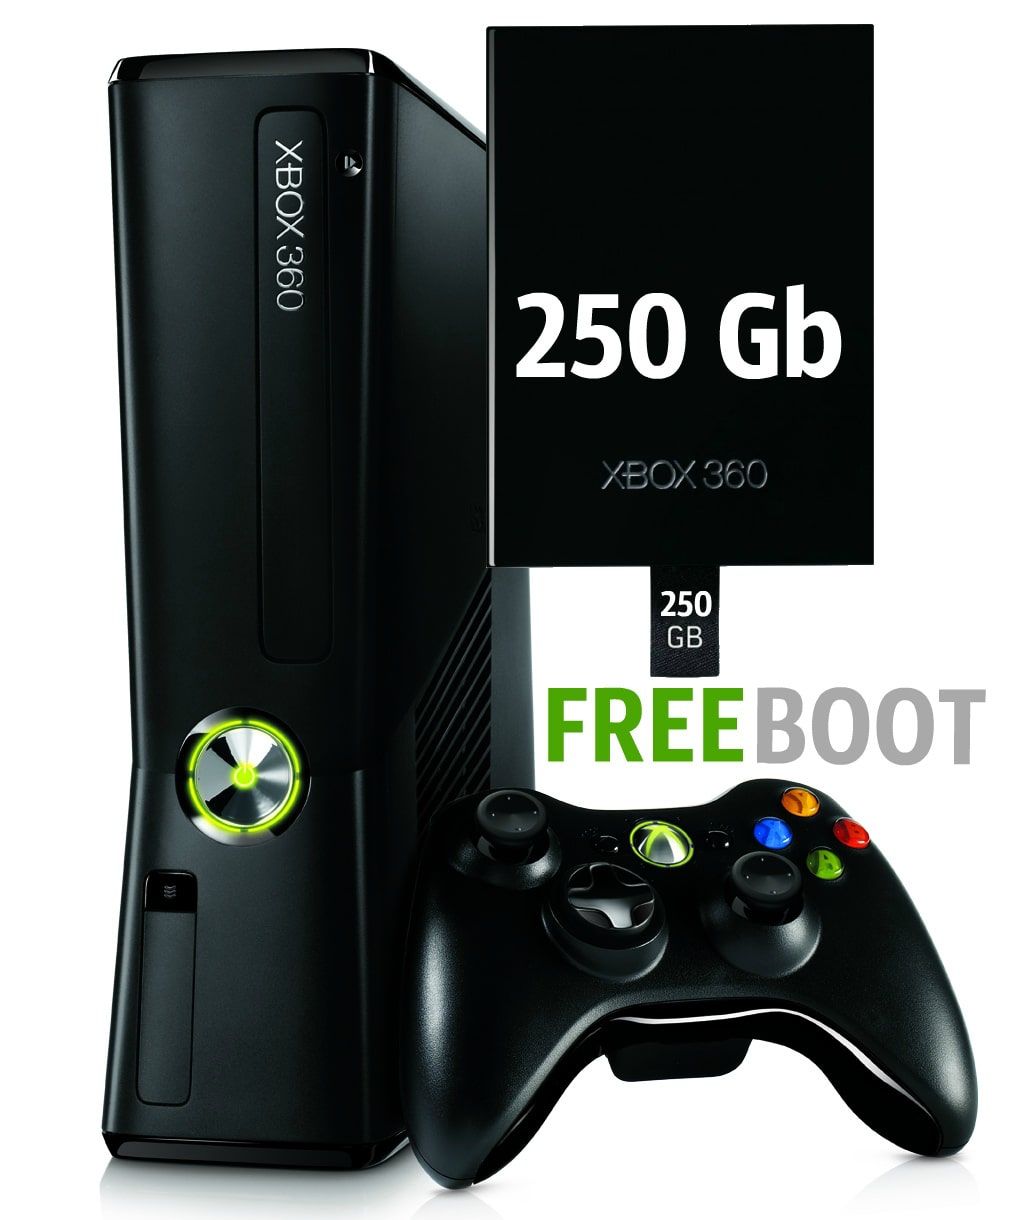 Xbox 360 Slim 250 Gb Freeboot (170 игр на HDD)